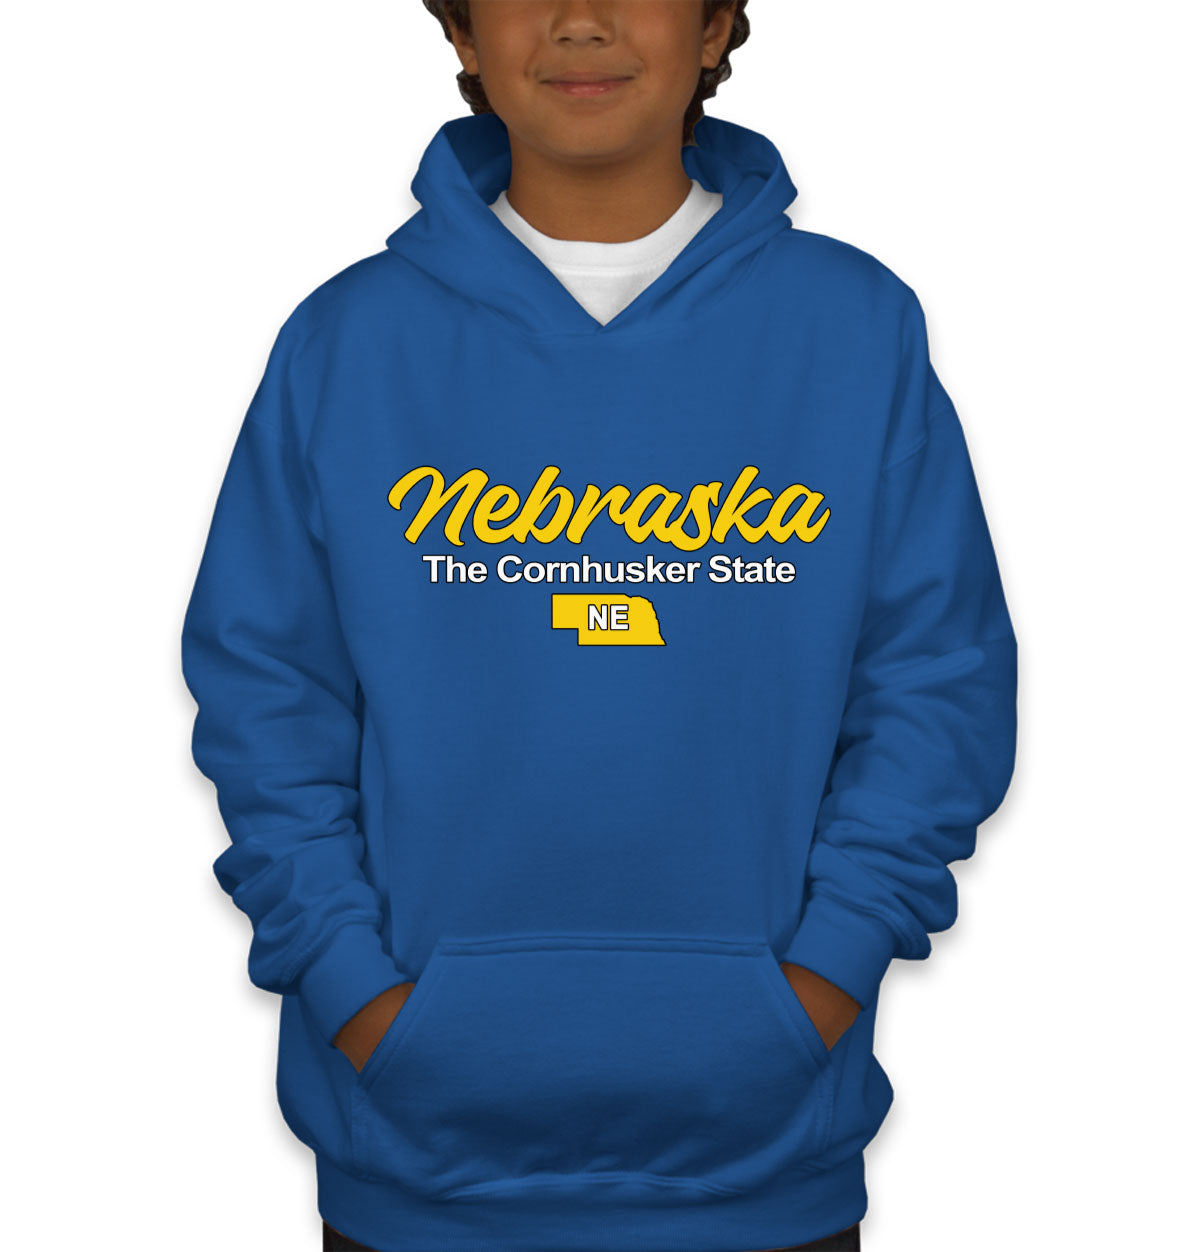 Nebraska The Cornhusker State Youth Hoodie